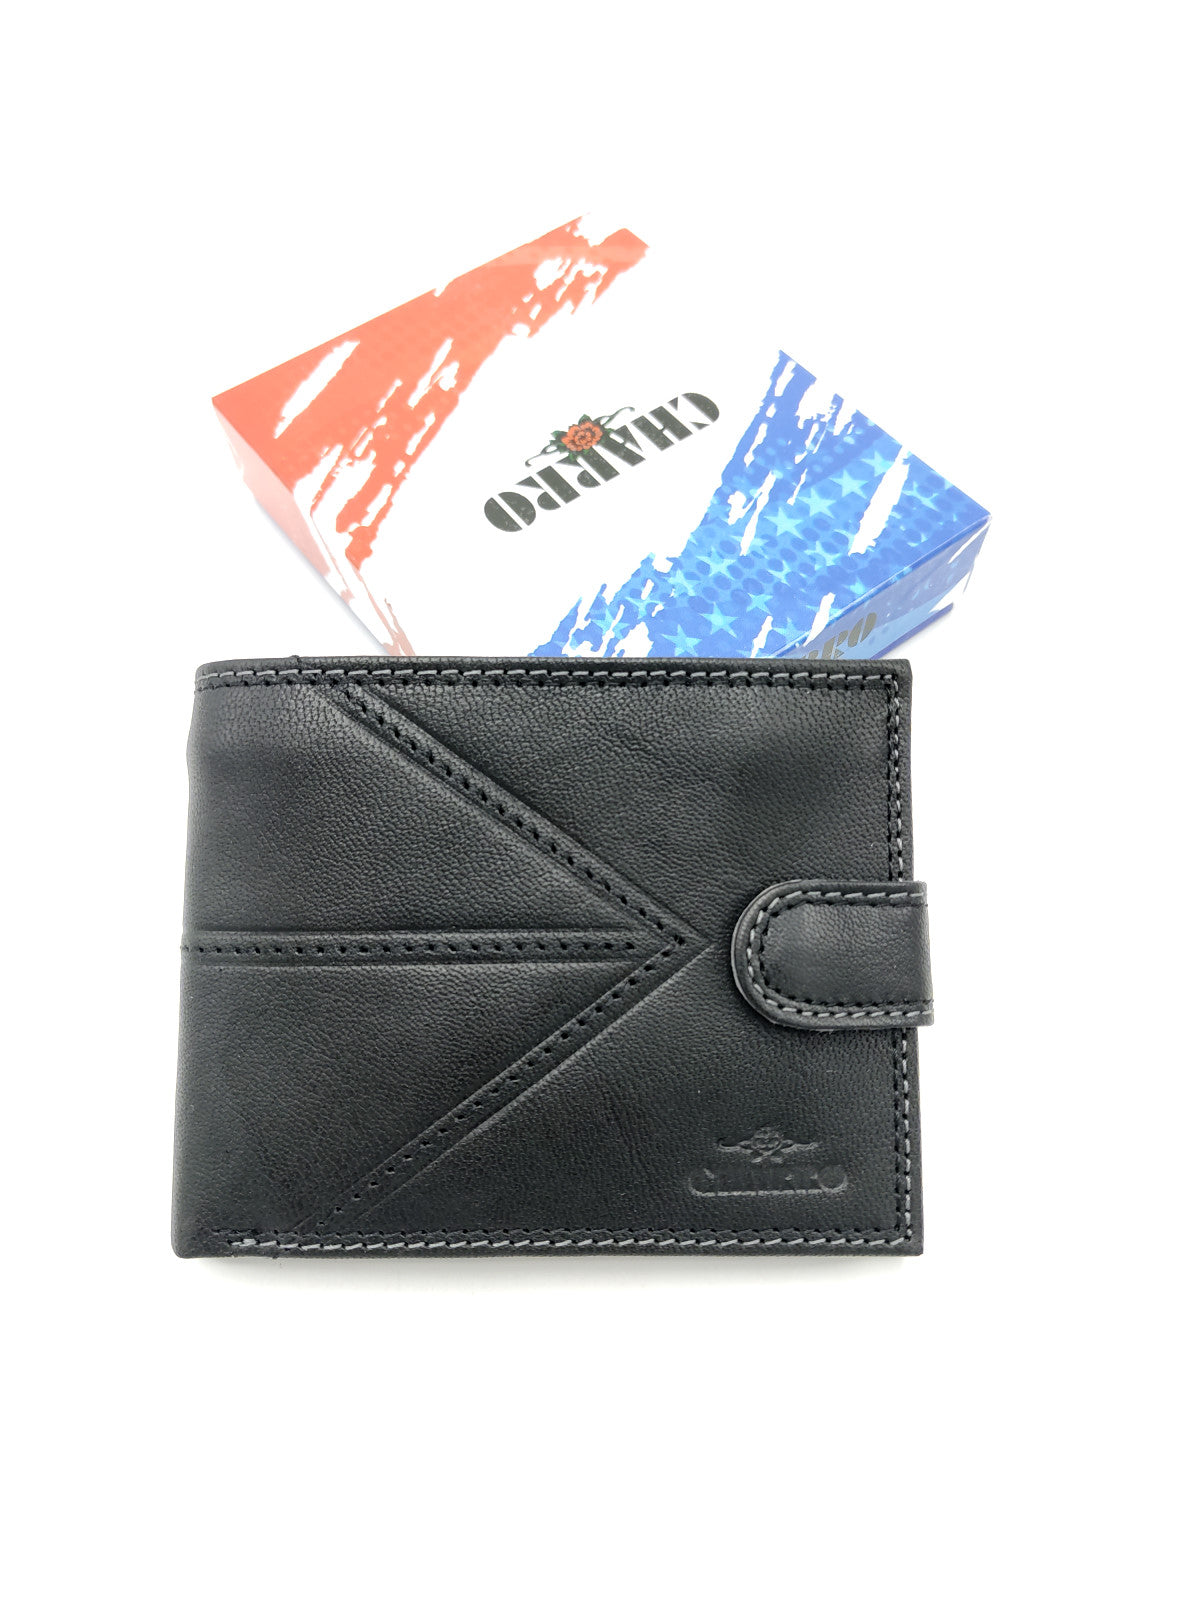 Genuine leather wallet for men, Brand Charro, art. IREC1128.422